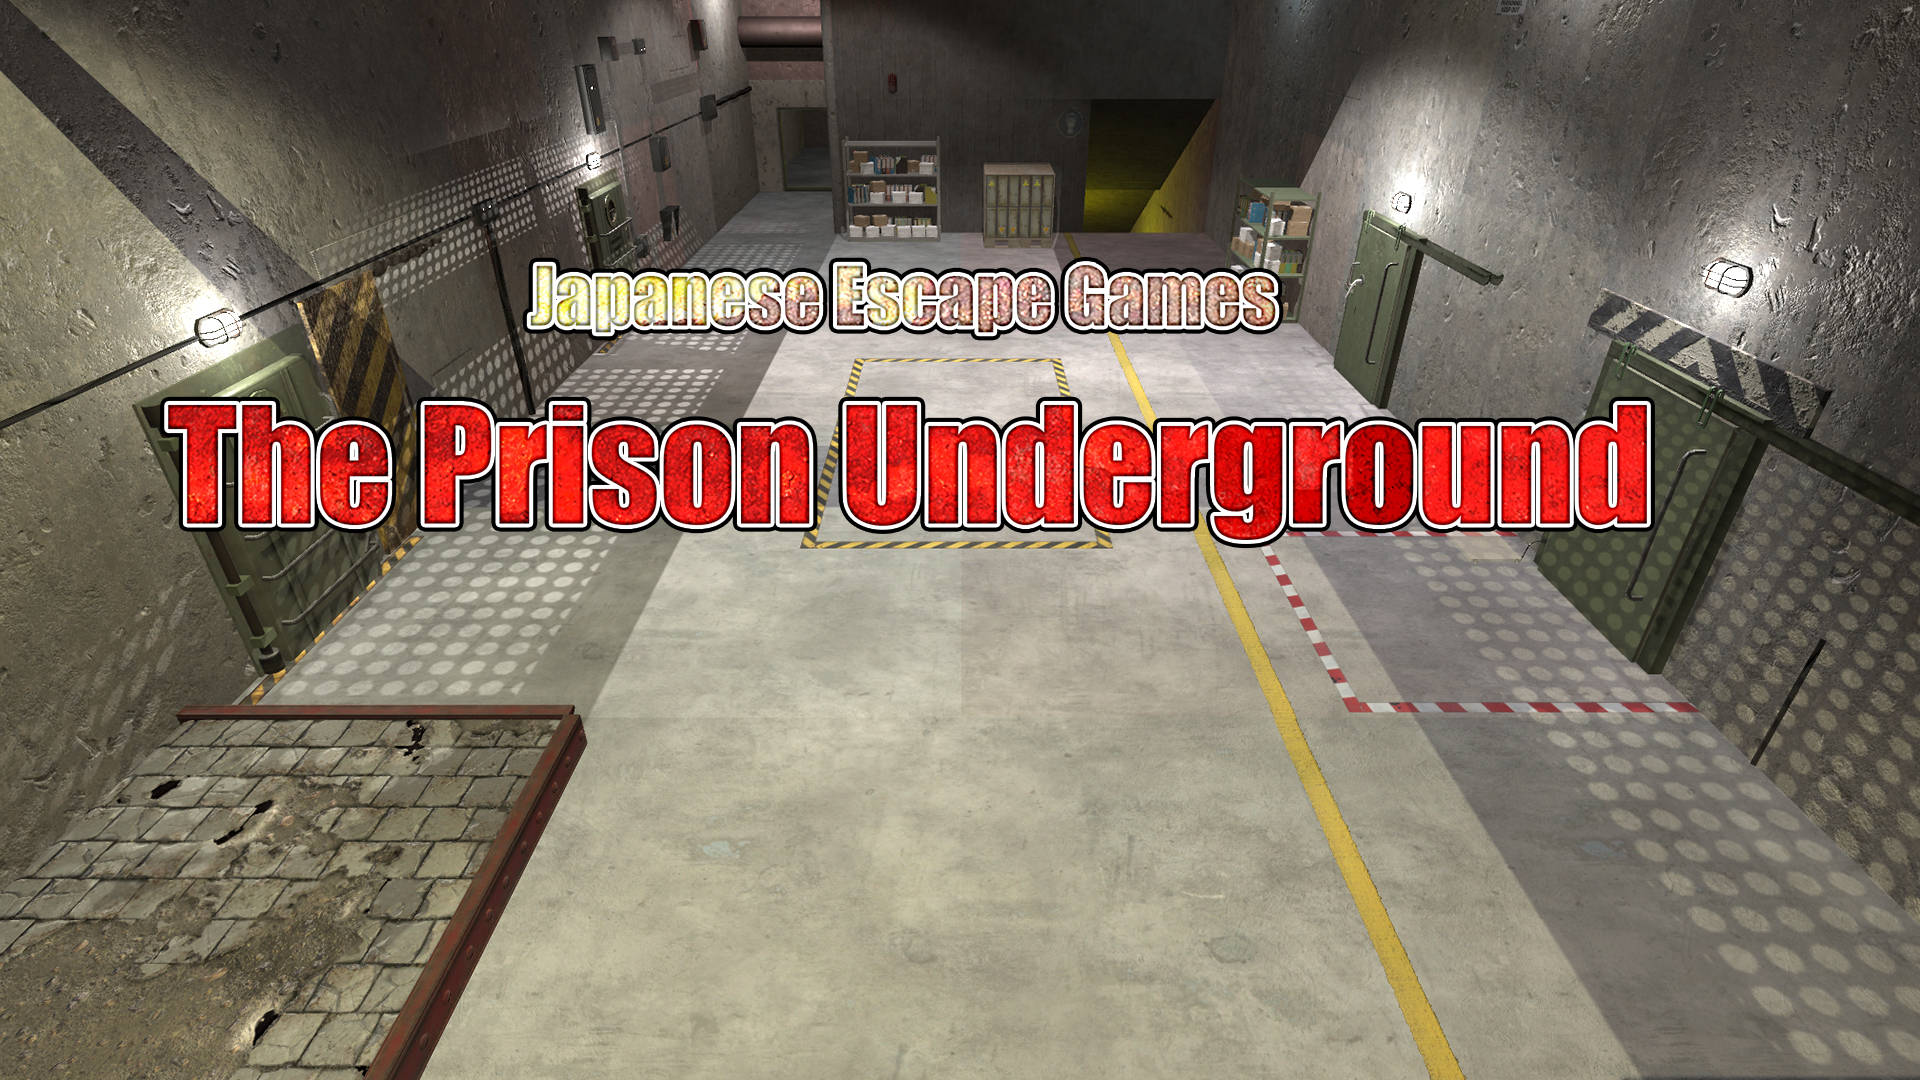 Japanese Escape Games The Prison Underground